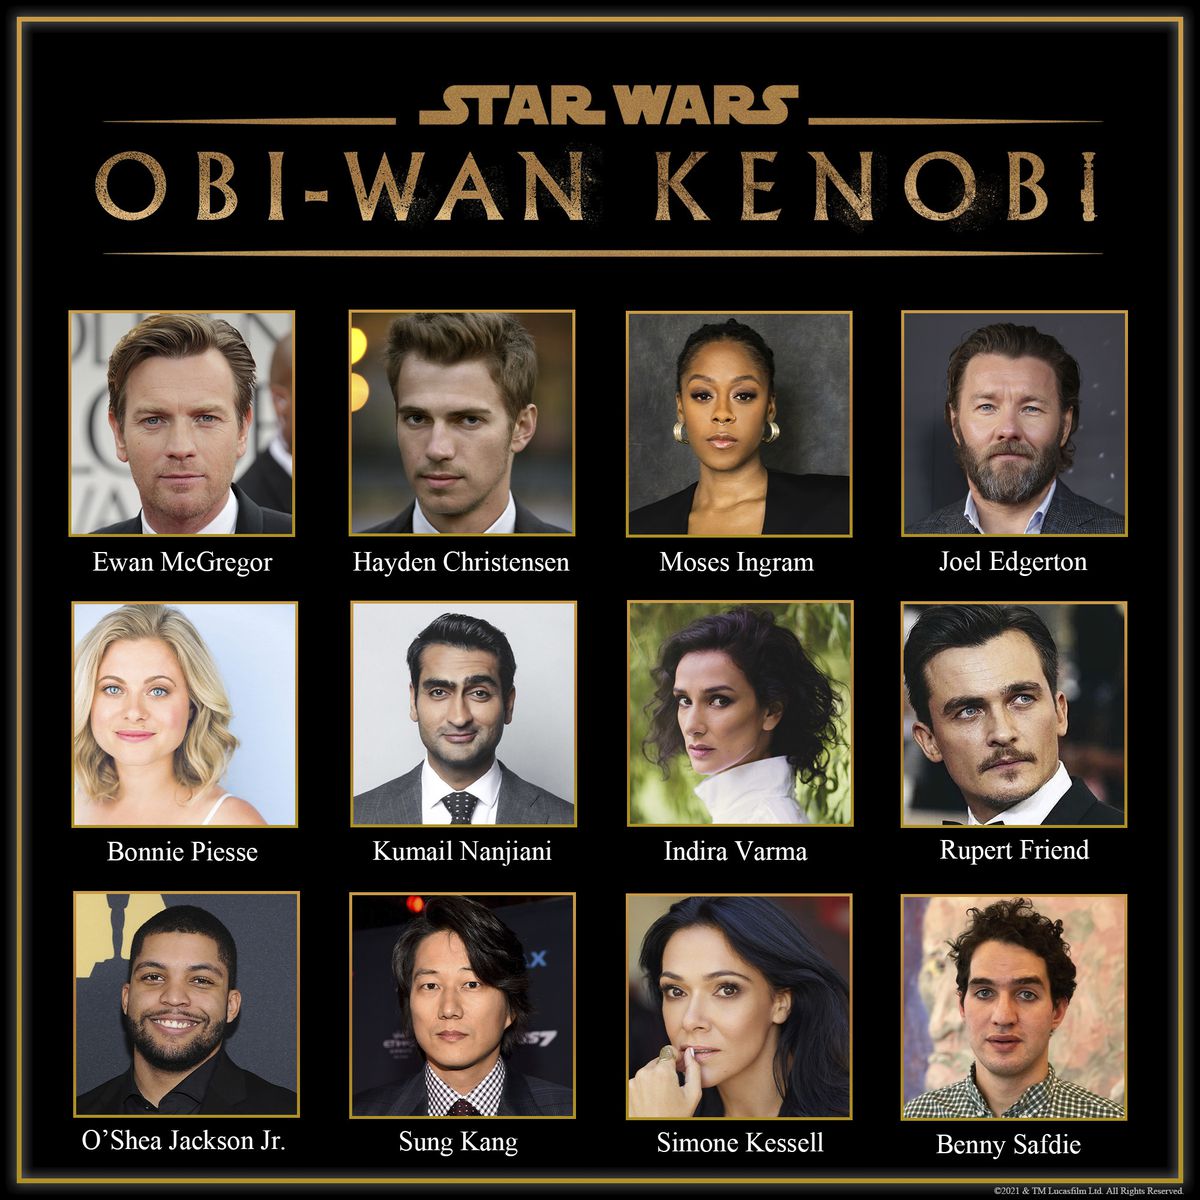 il cast recentemente annunciato di Obi-Wan Kenobi, con ewan mcgregor e hayden christensen